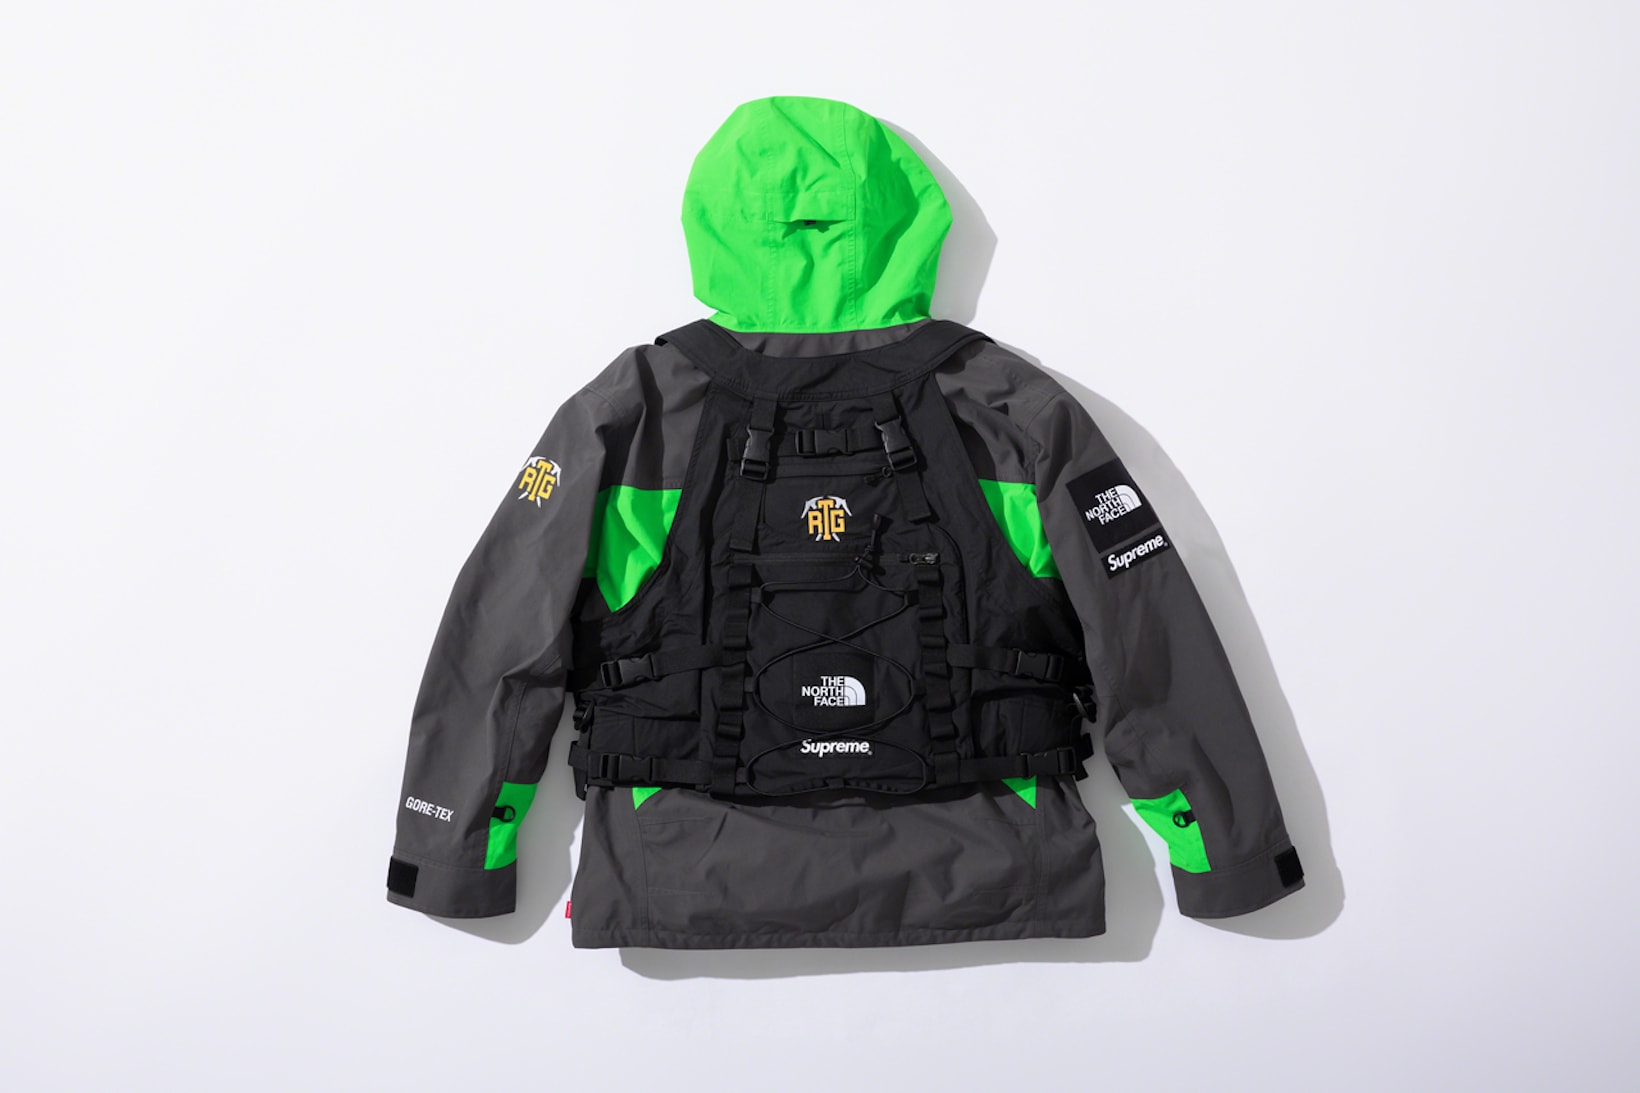 Supreme X The North Face Jacket Black + Vest Combo